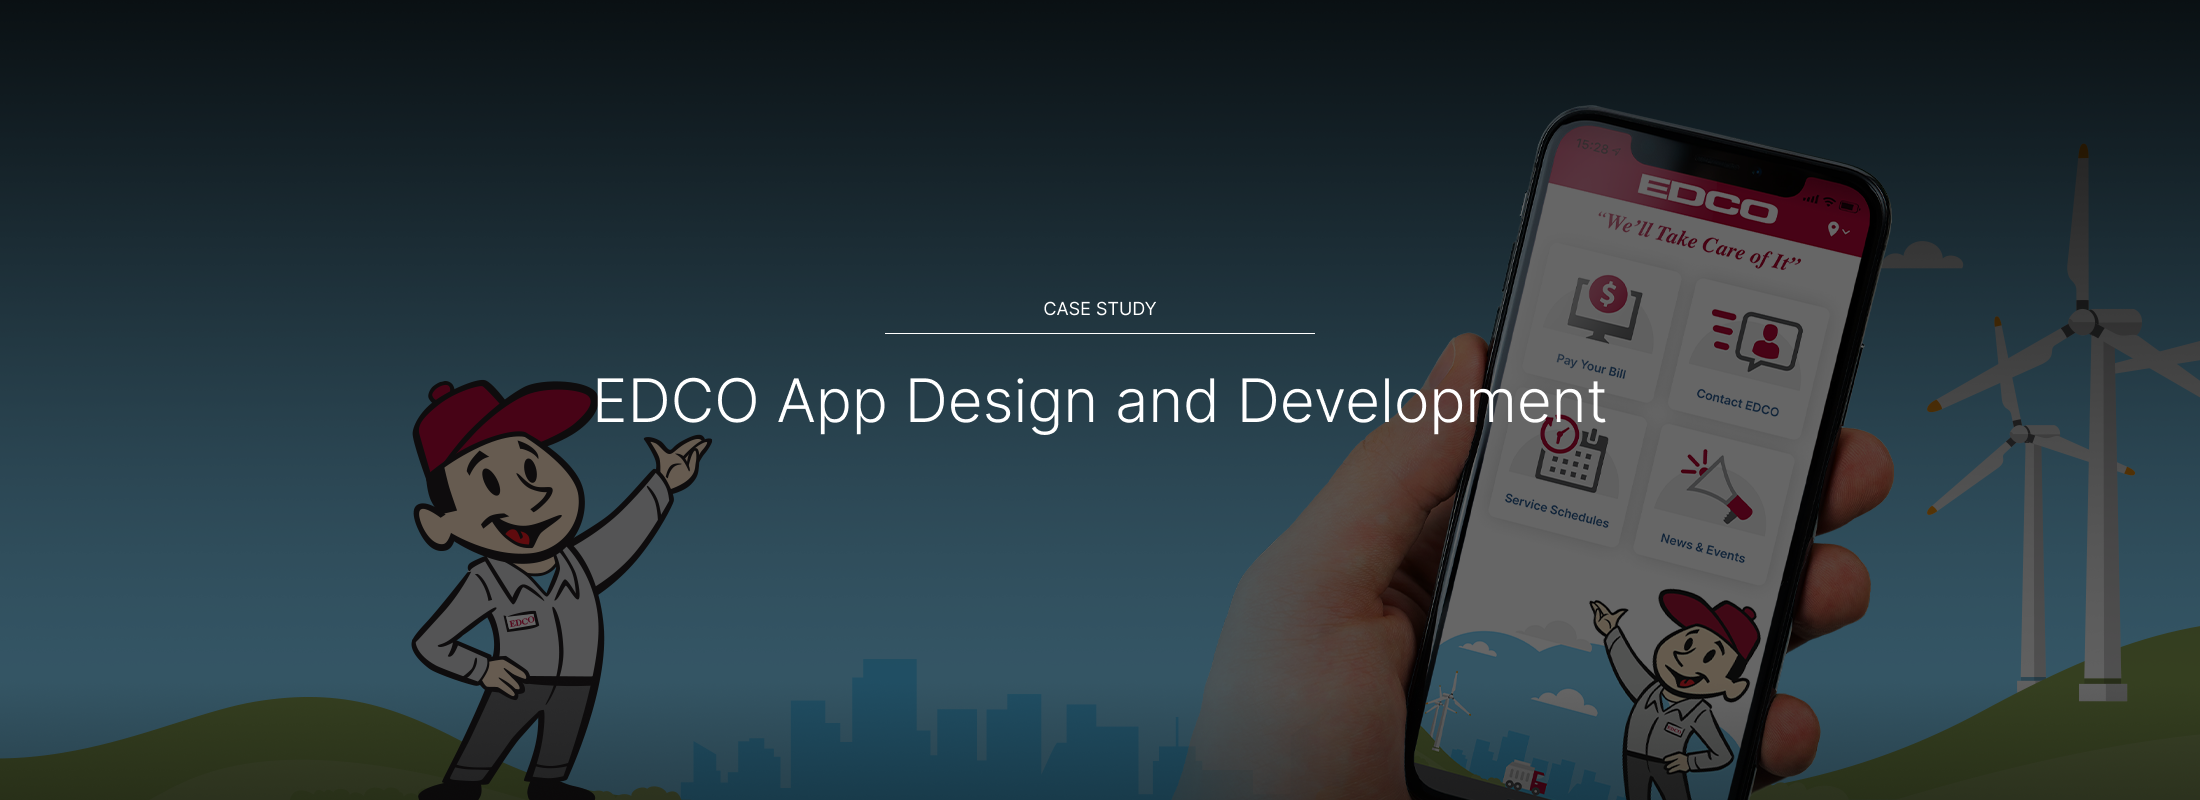 EDCO App Design and Development